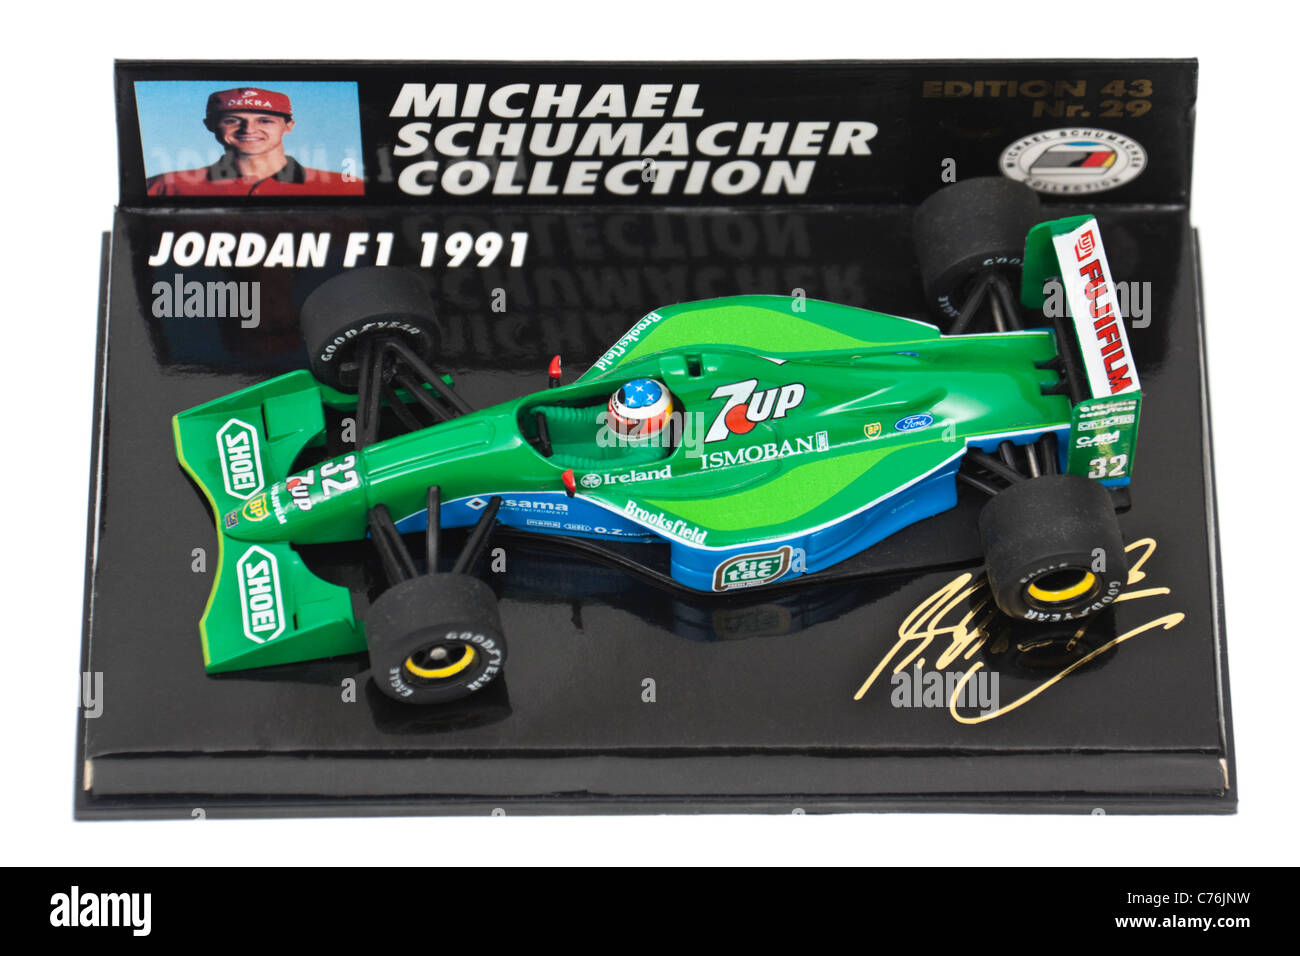 1991 Jordan F1 Racing Car Michael Schumacher S First Formula One Racing Car 1 43 Scale Model Stock Photo Alamy